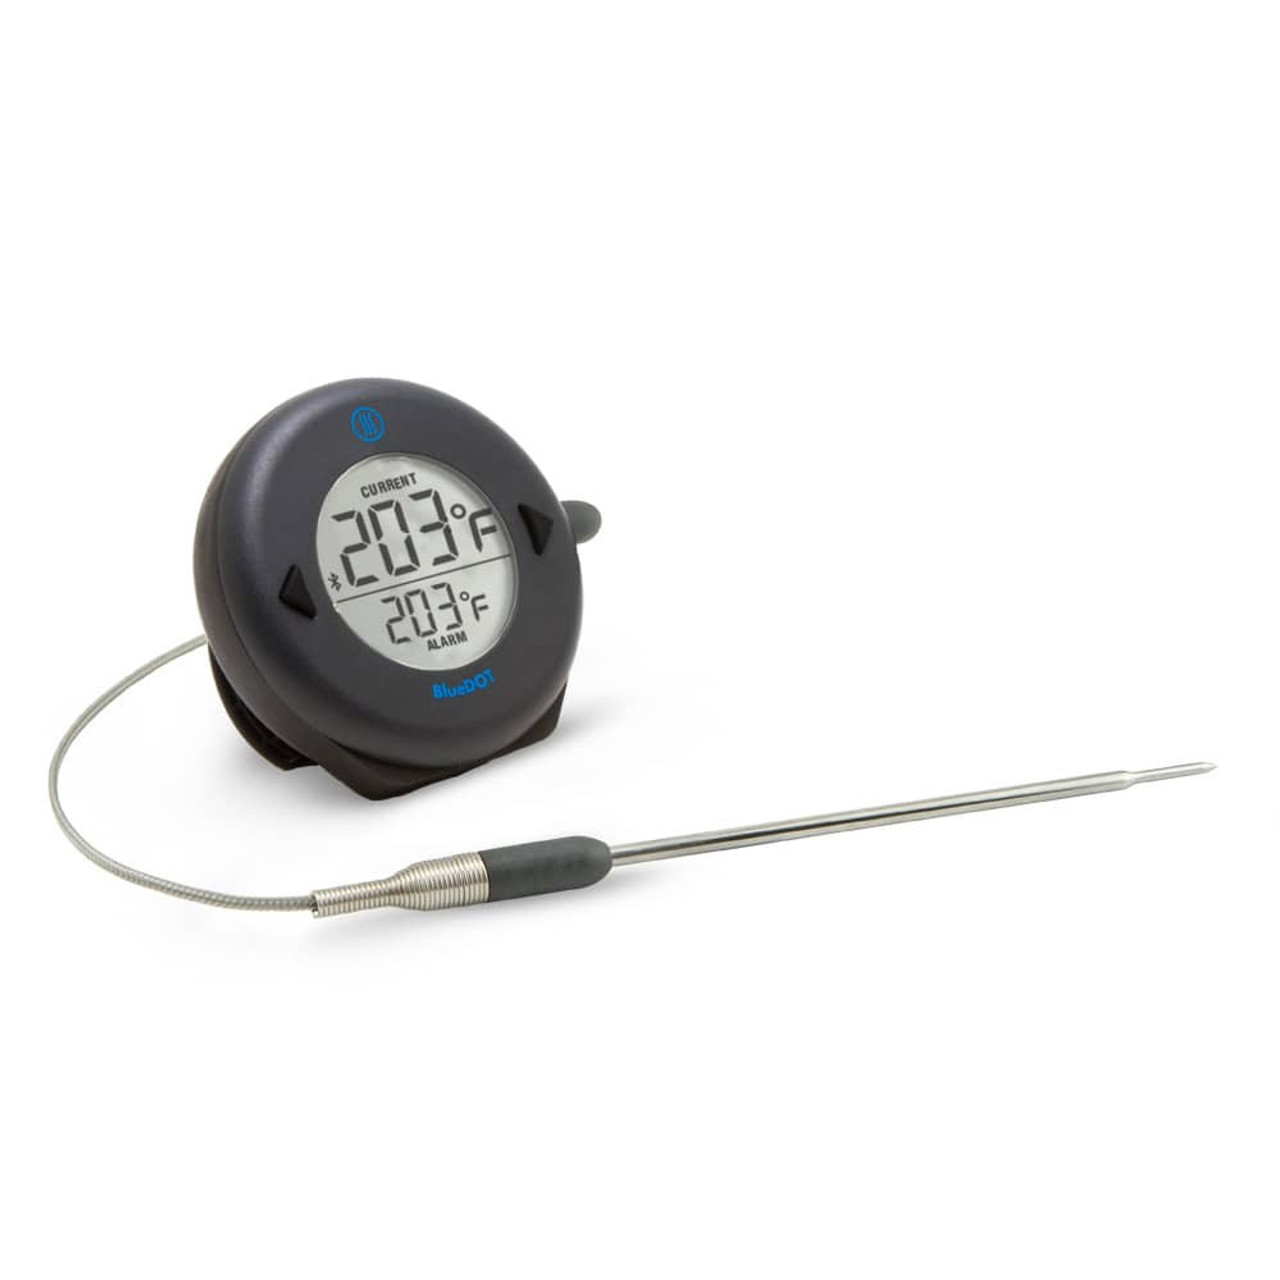 geluk Eeuwigdurend Aanwezigheid BlueDOT® Alarm Thermometer with Bluetooth® Wireless Technology | ThermoWorks